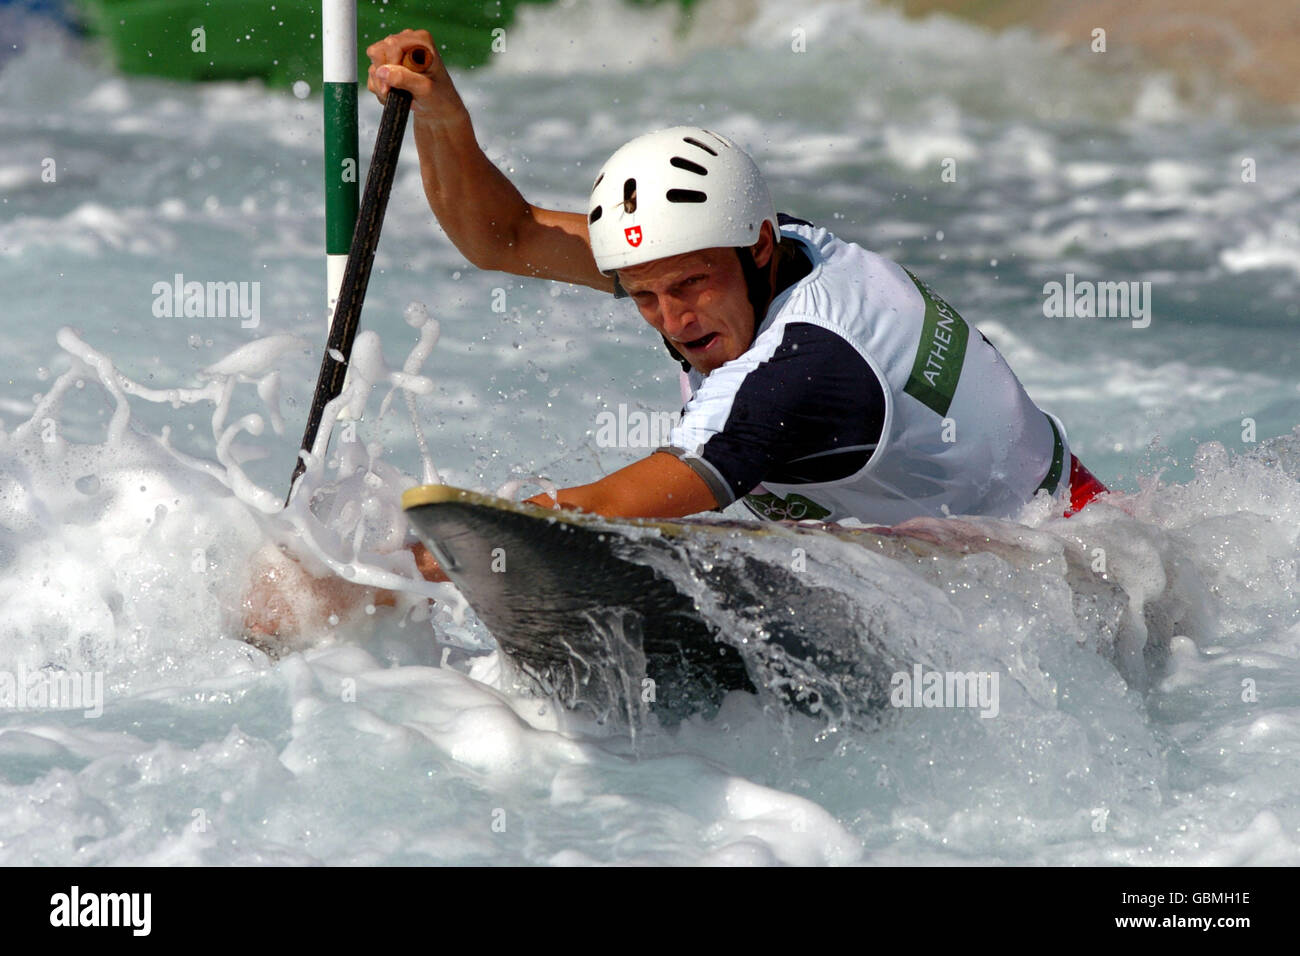 Canoeing - Athens Olympic Games 2004 - Men's C1 Canoe Single Stock Photo